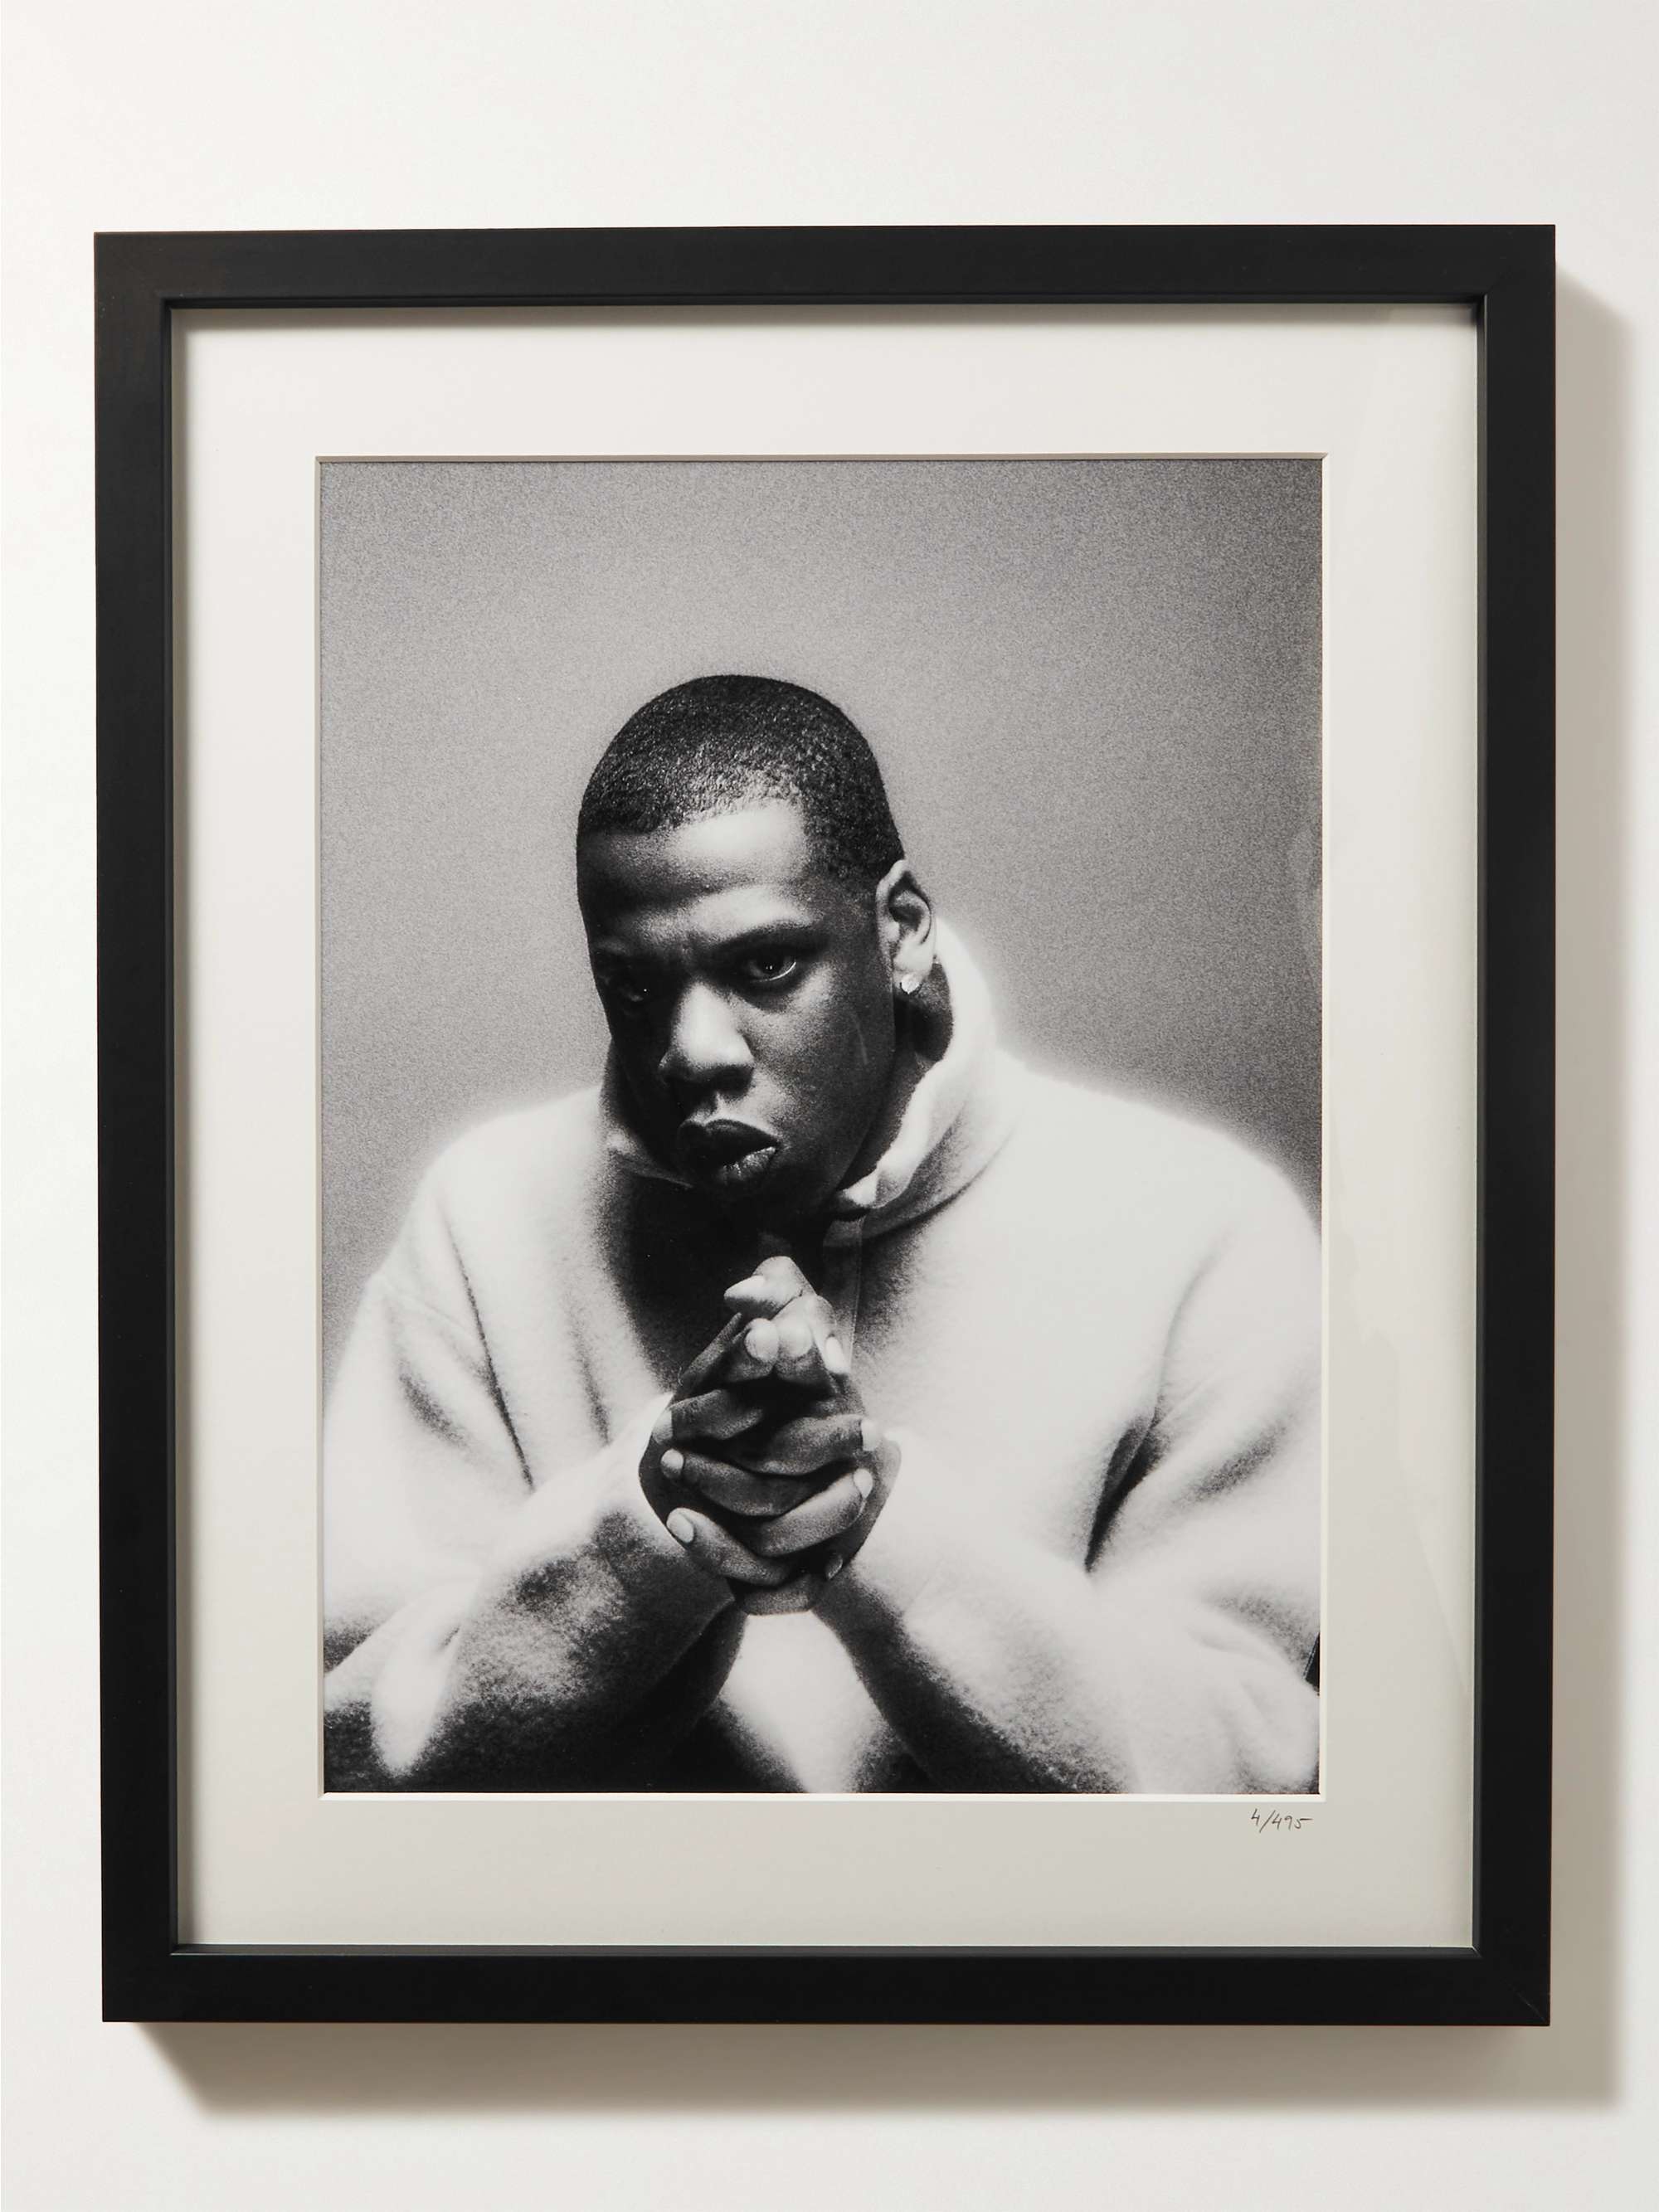 SONIC EDITIONS Framed 1998 Jay-Z Print, 16" x 20"